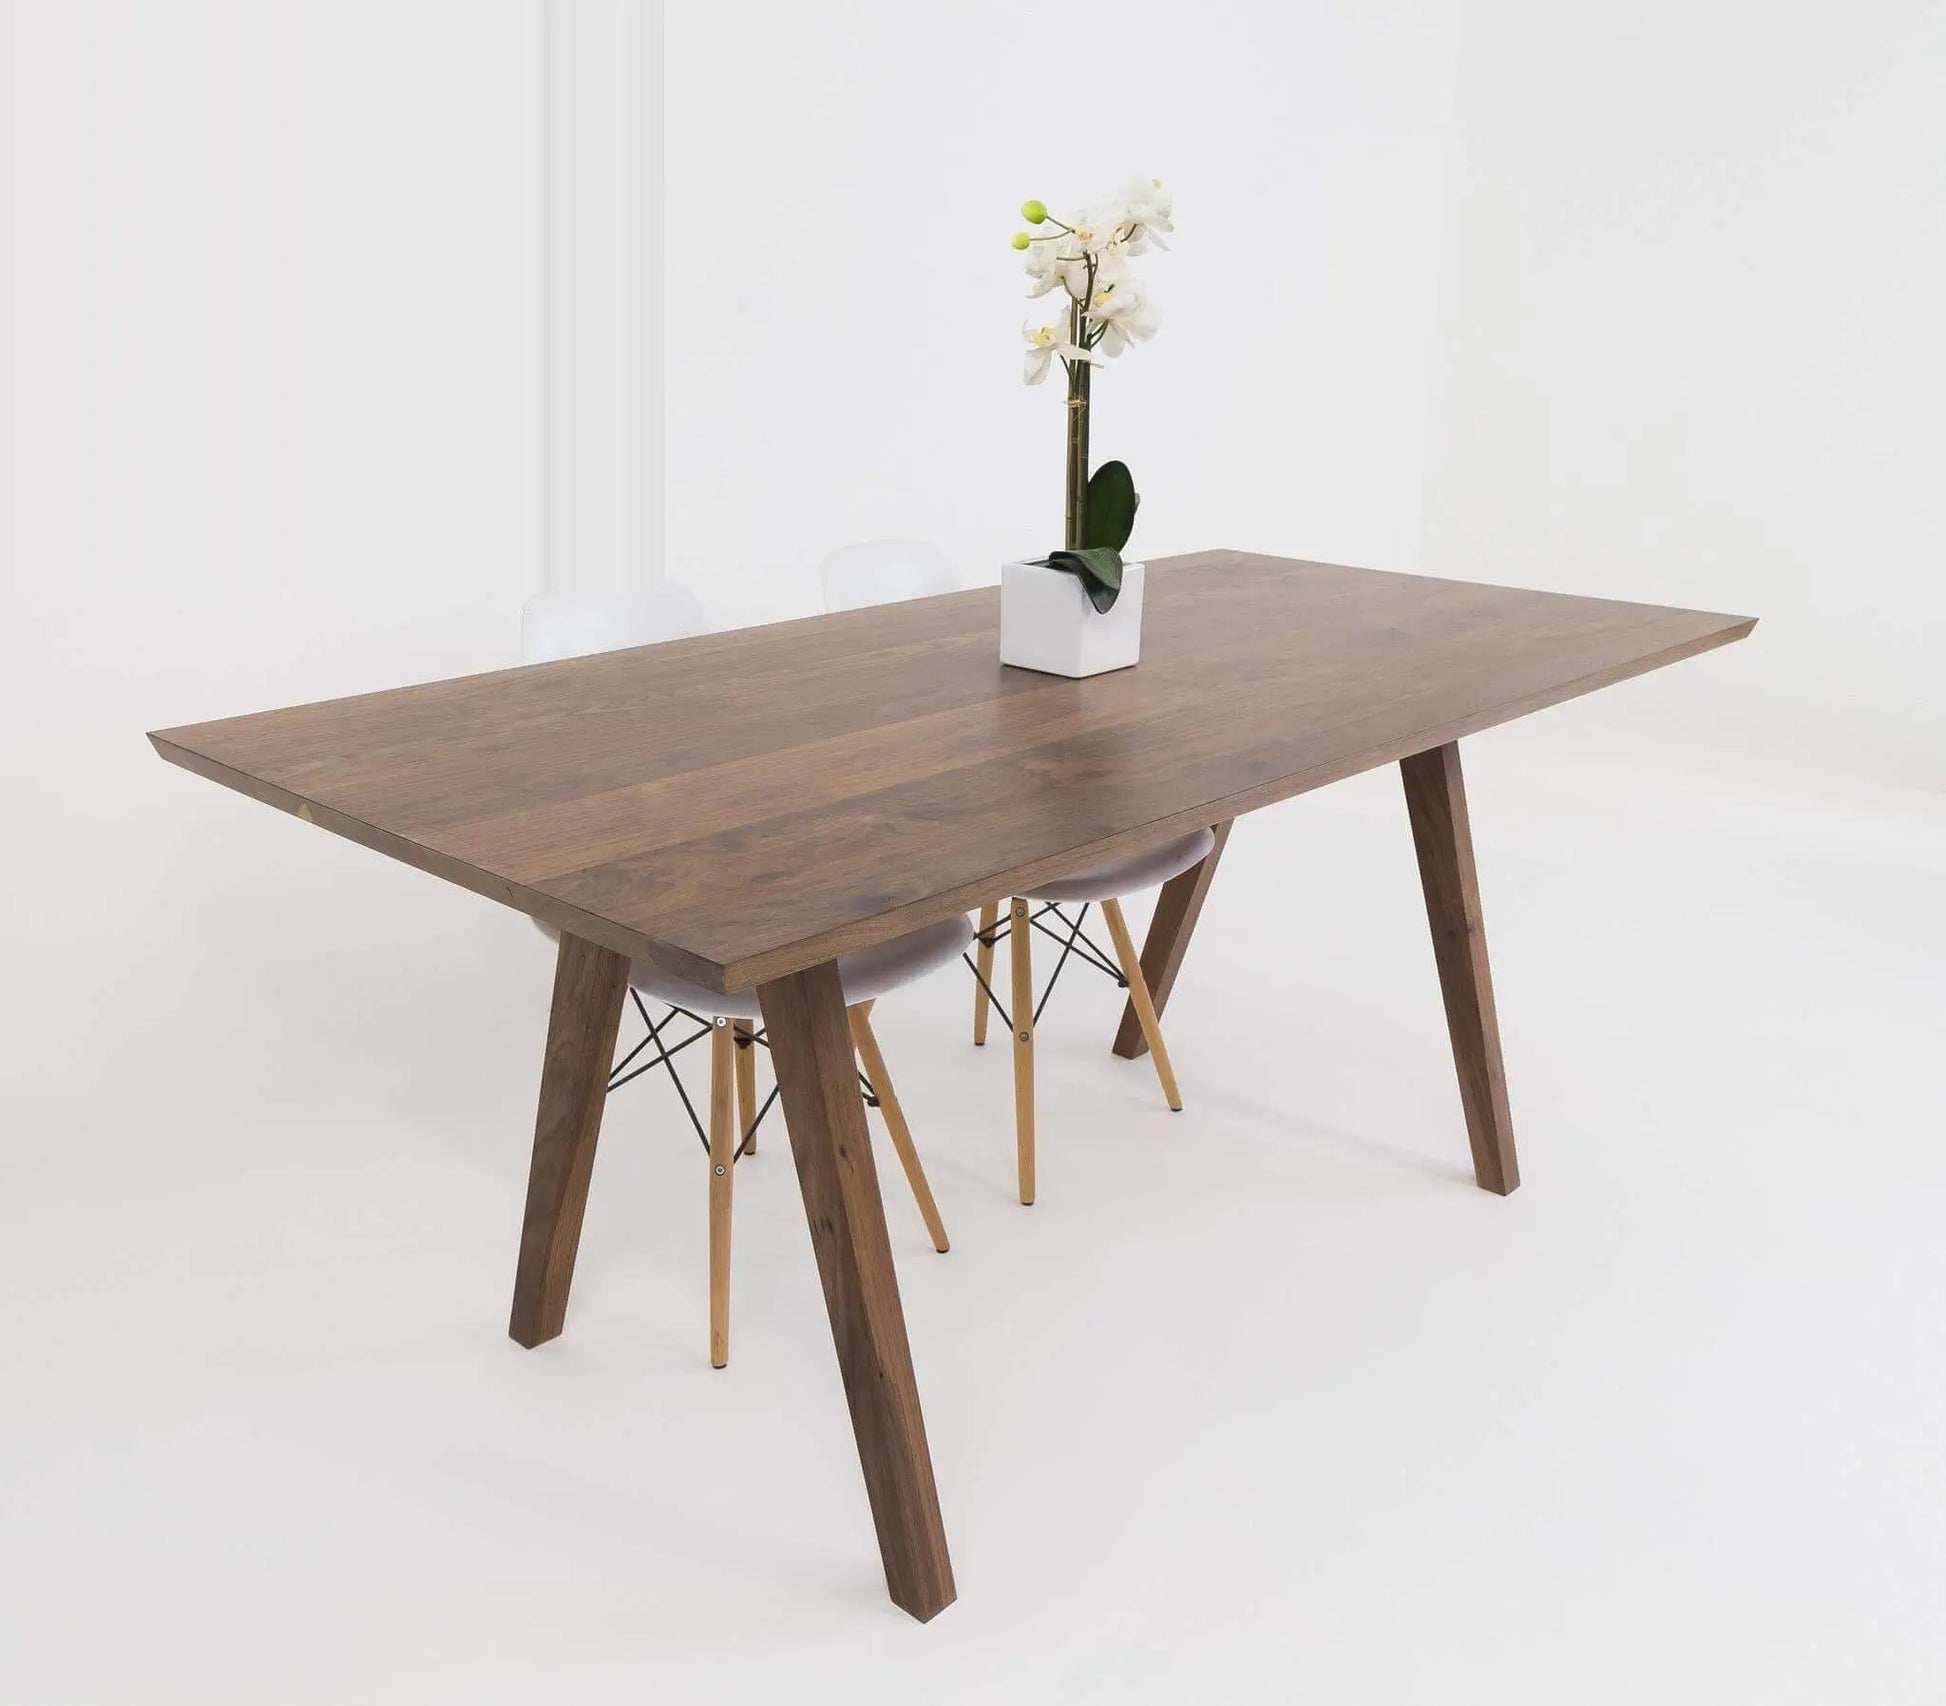 Artistic angle of the Sputnik Scandinavian Modern Dining Table, highlighting its design